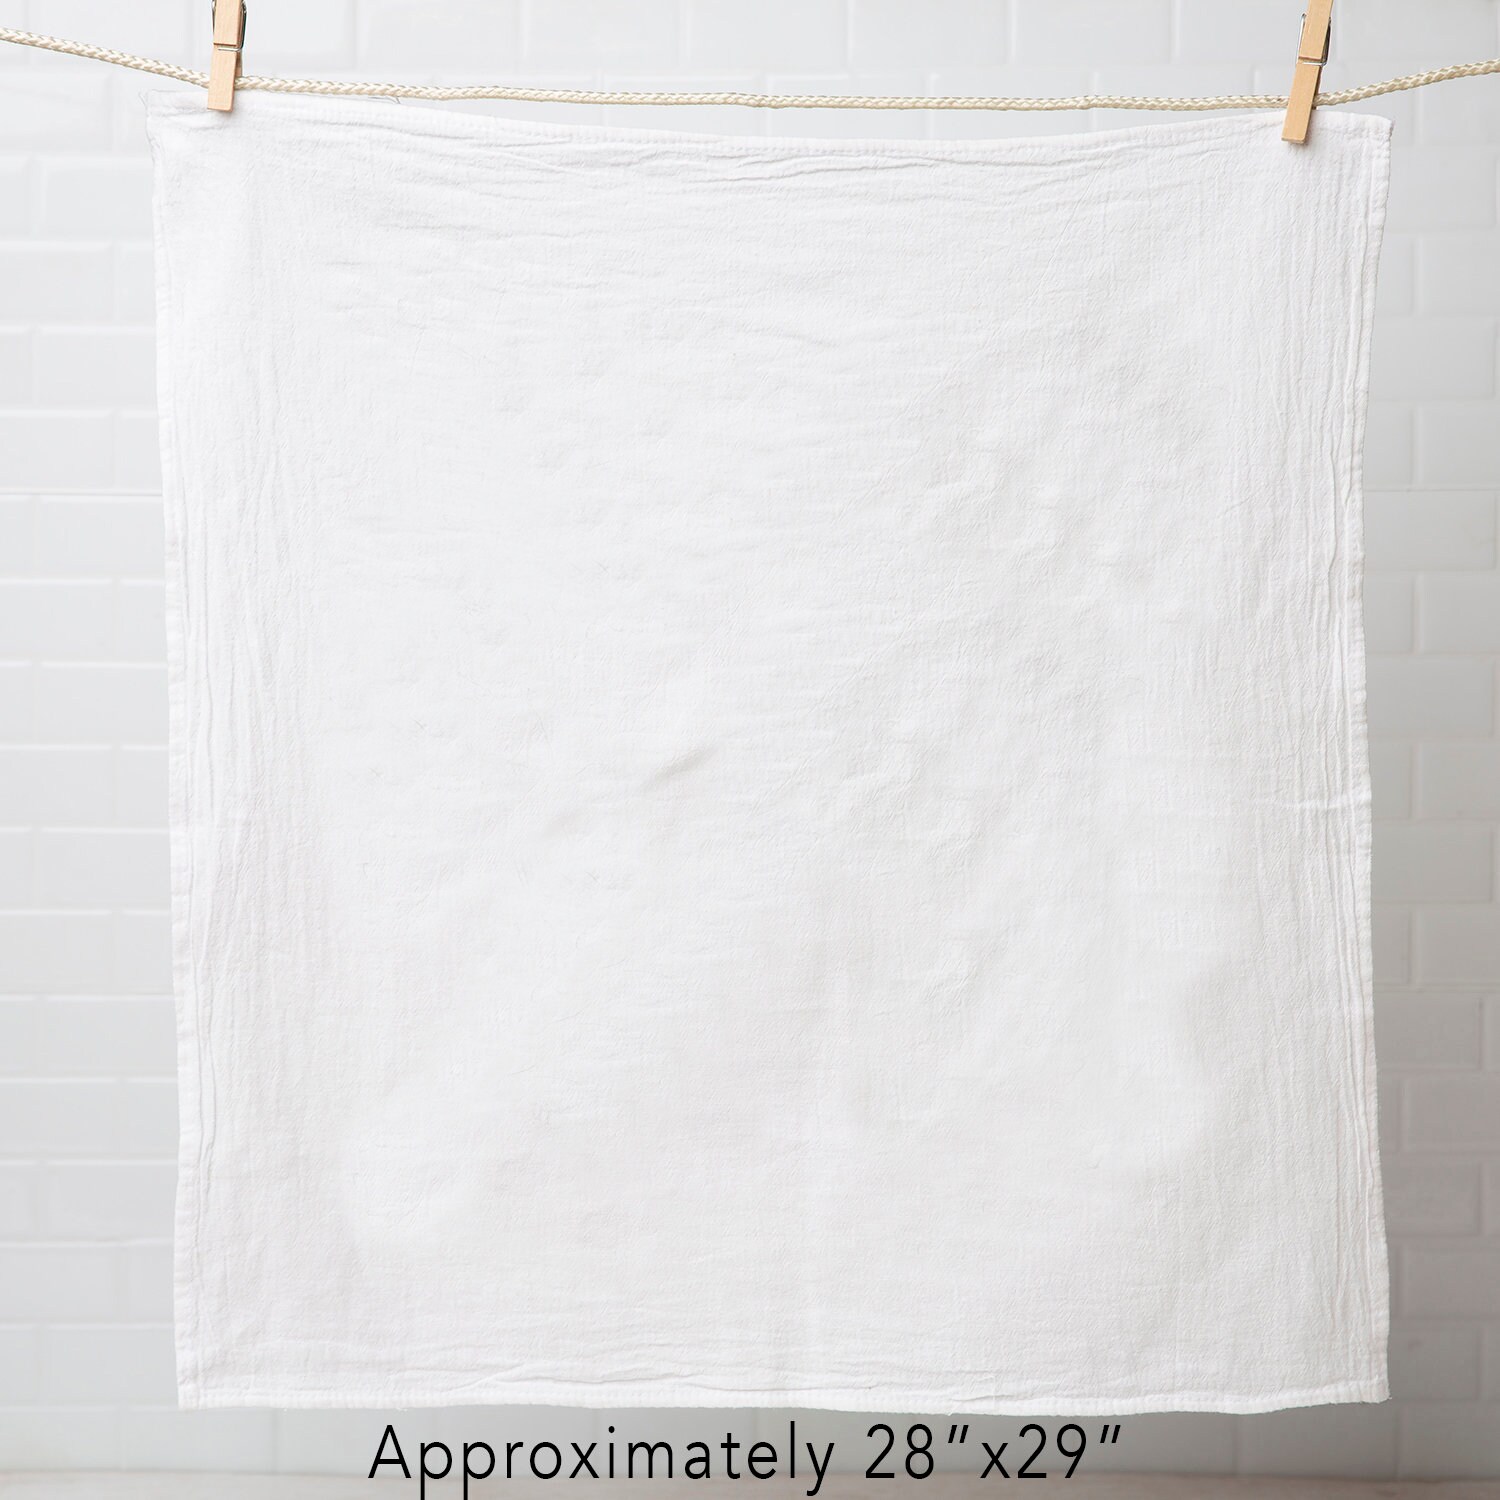 Brown Bear Tea Towel, Grizzly Tea Towel, Bear Kitchen Towel - Hand Printed  Flour Sack Tea Towel